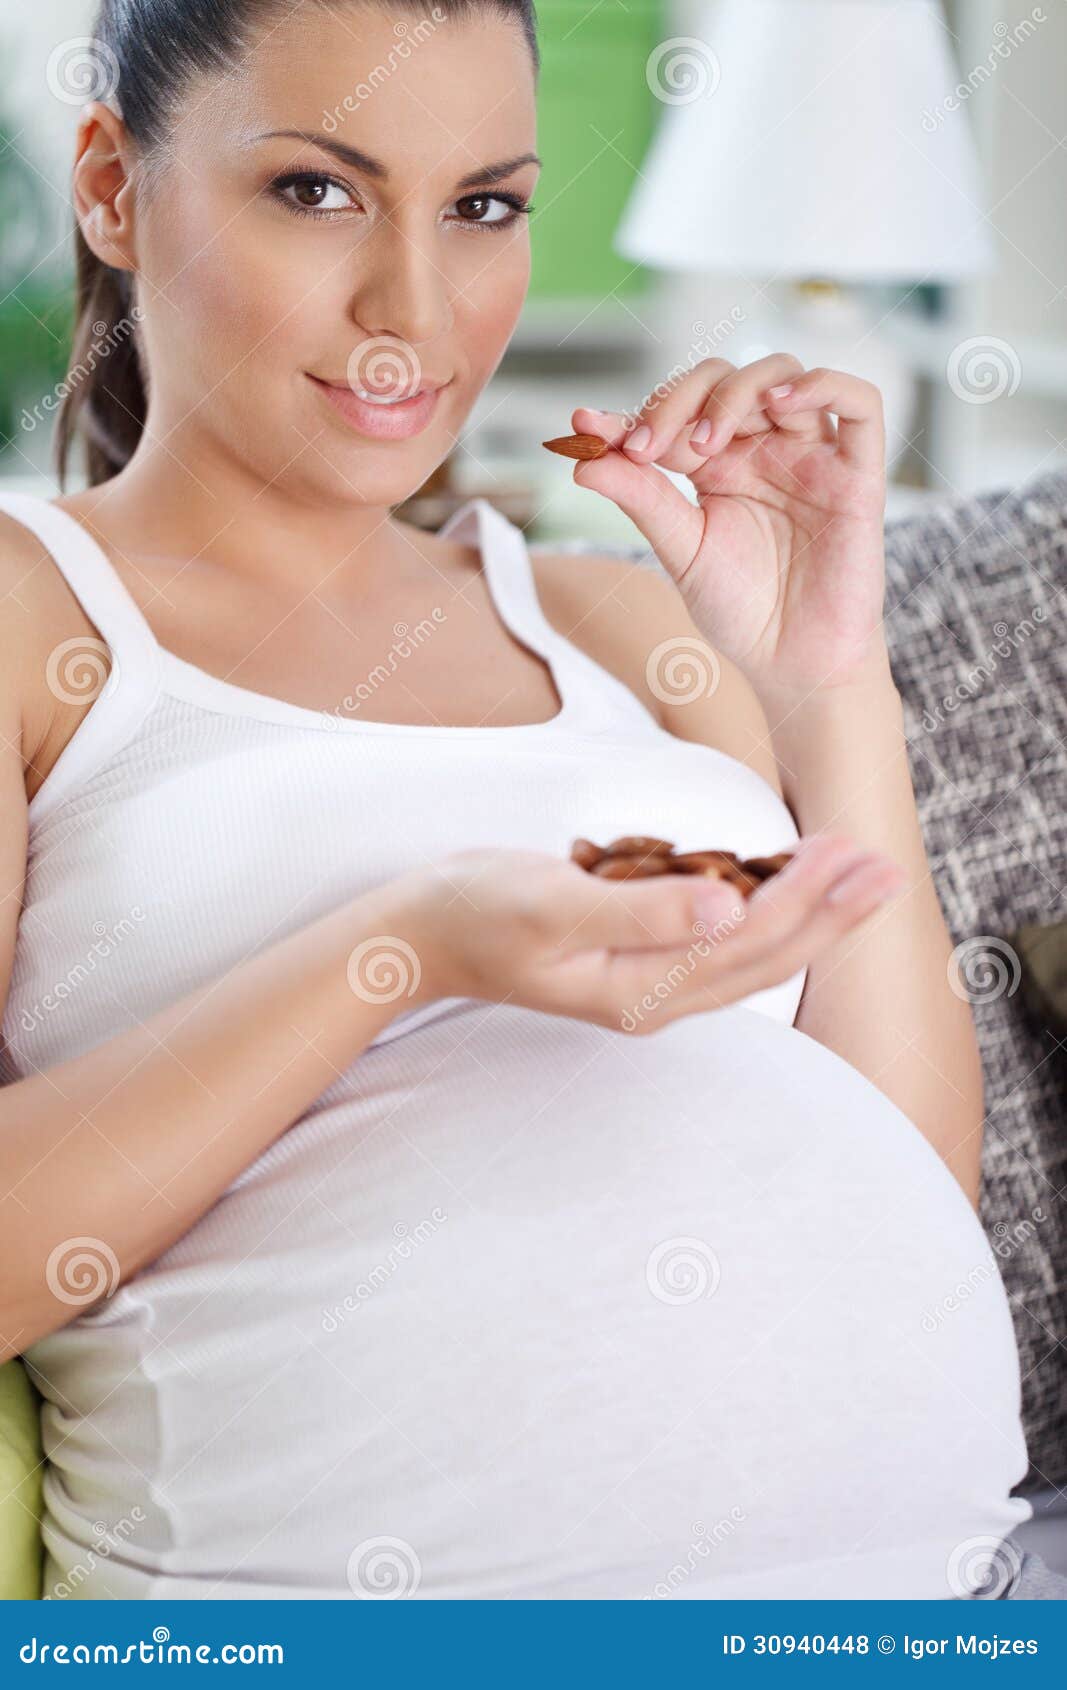 Eating Ham When Pregnant 56